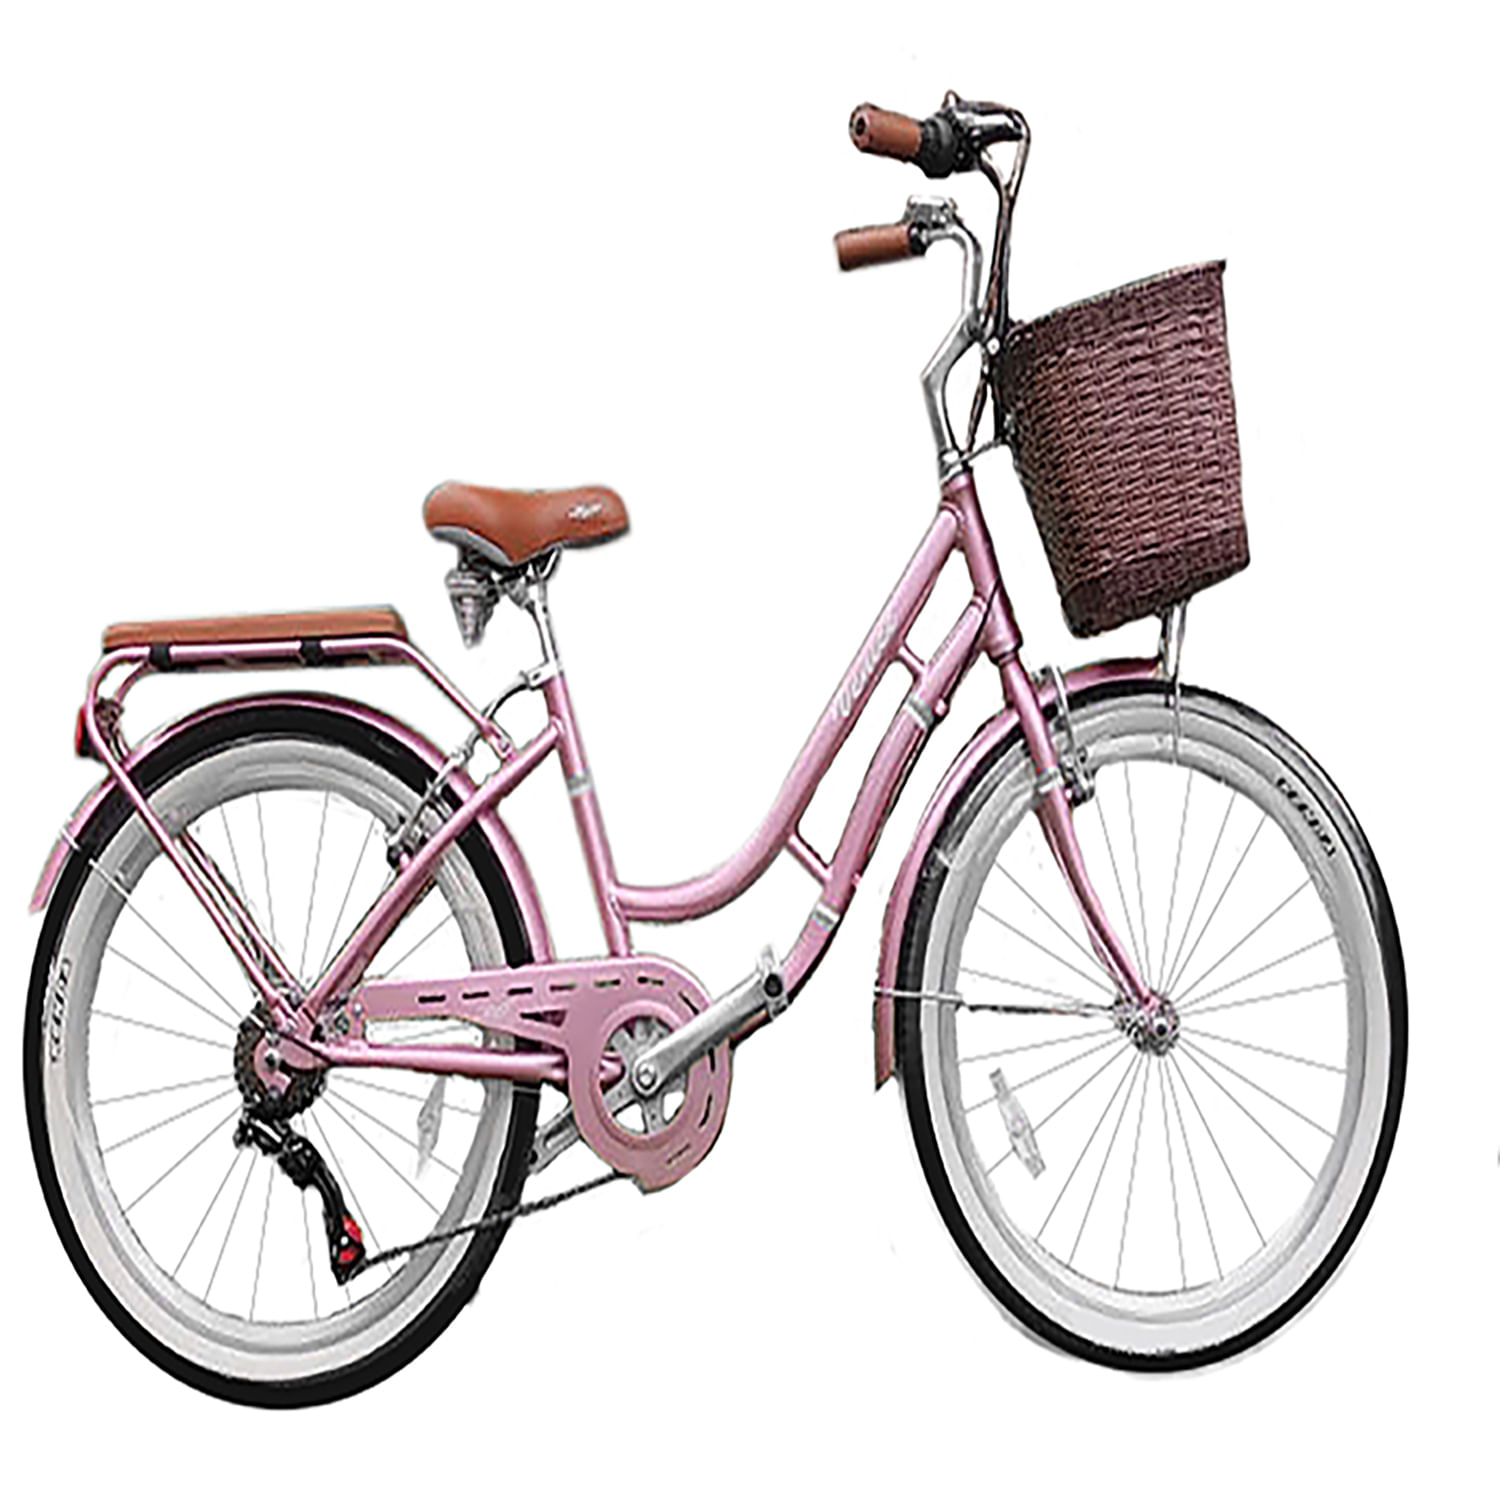 Bicicleta Aro 24 kenda/shimano 7 Speed Venice Aluminio- Violeta